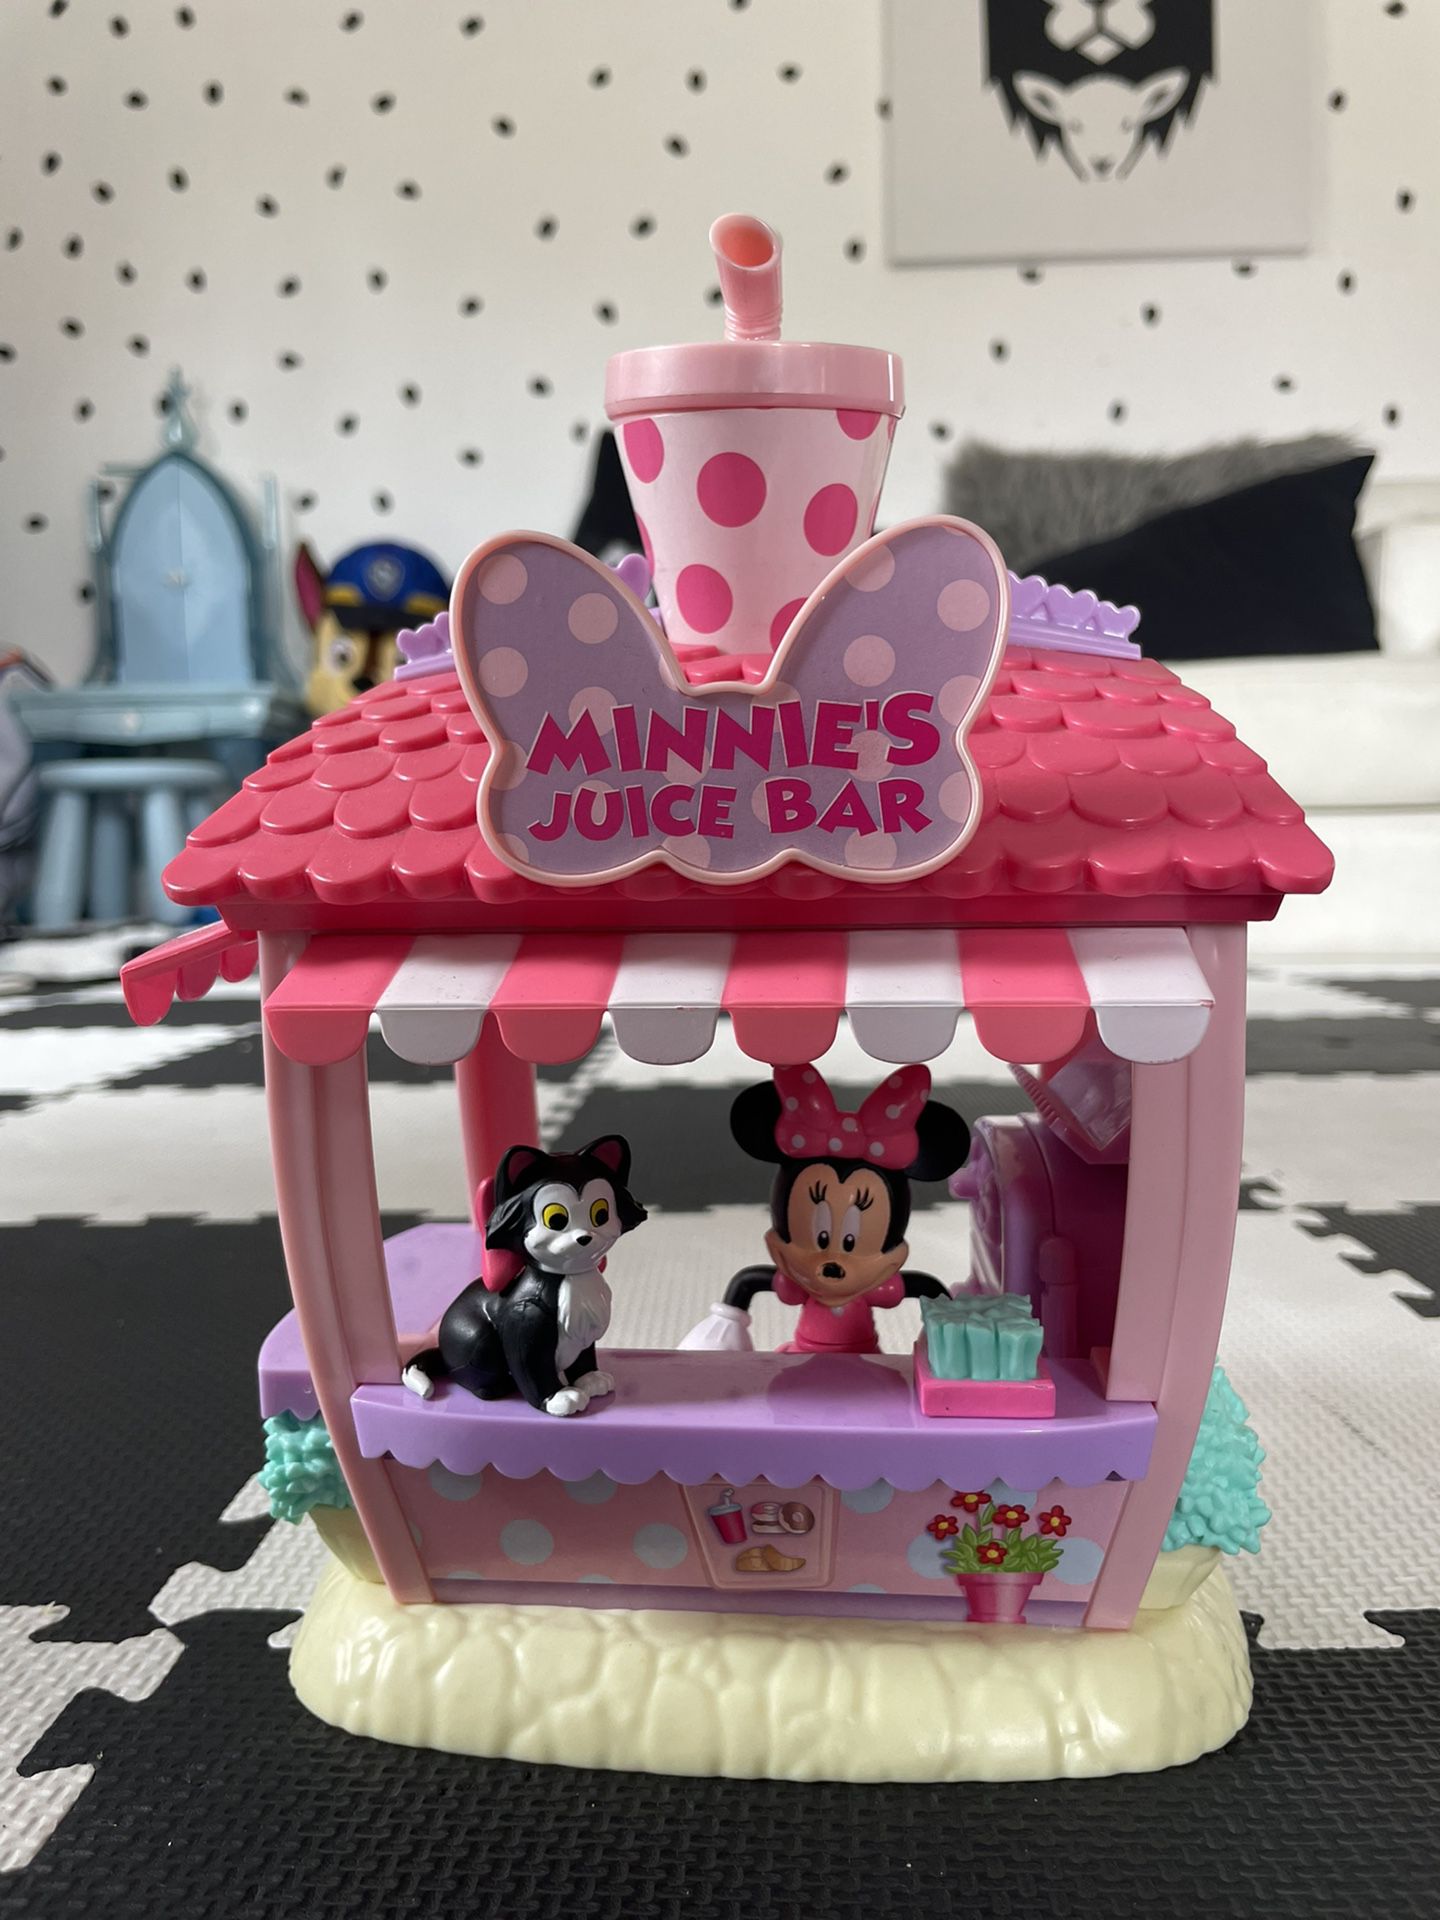 Disney Minnie Mouse Smoothie Play Set